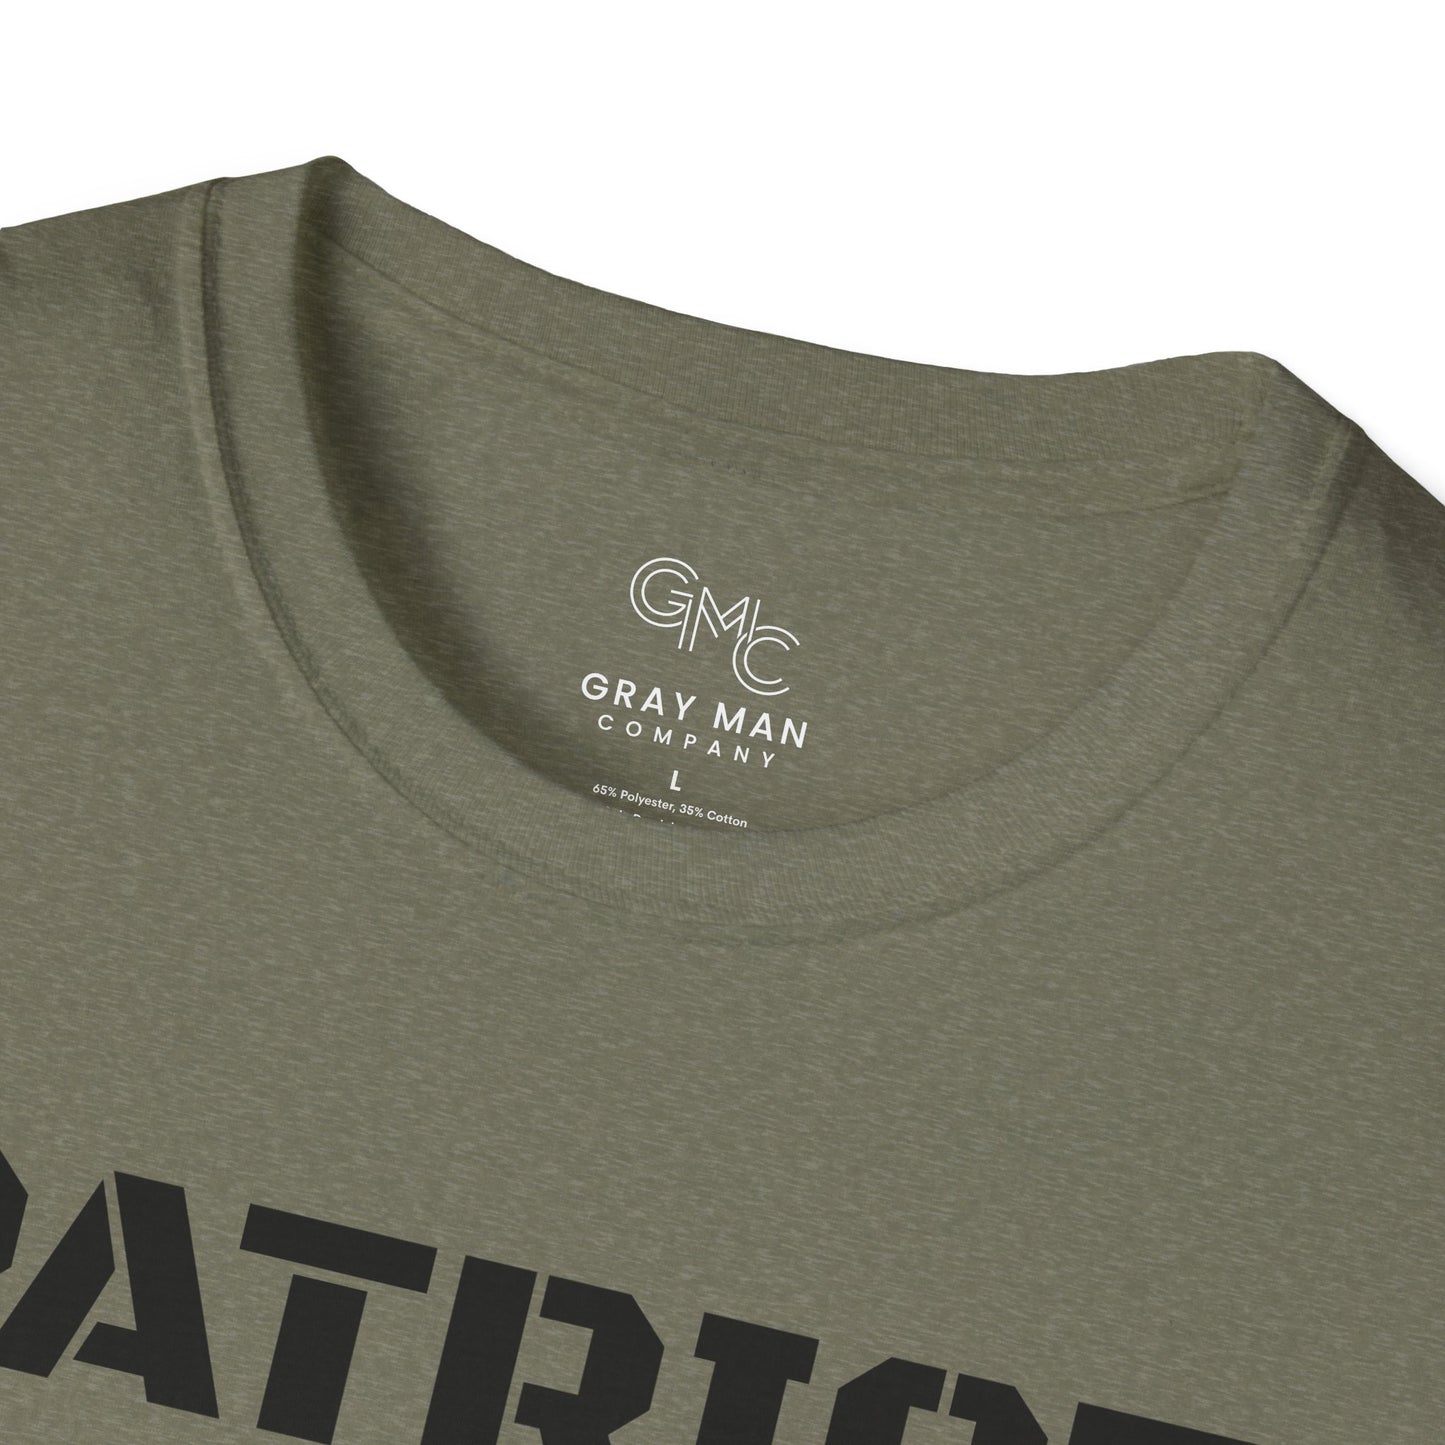 EDC Graphic T-Shirt - PATRIOT